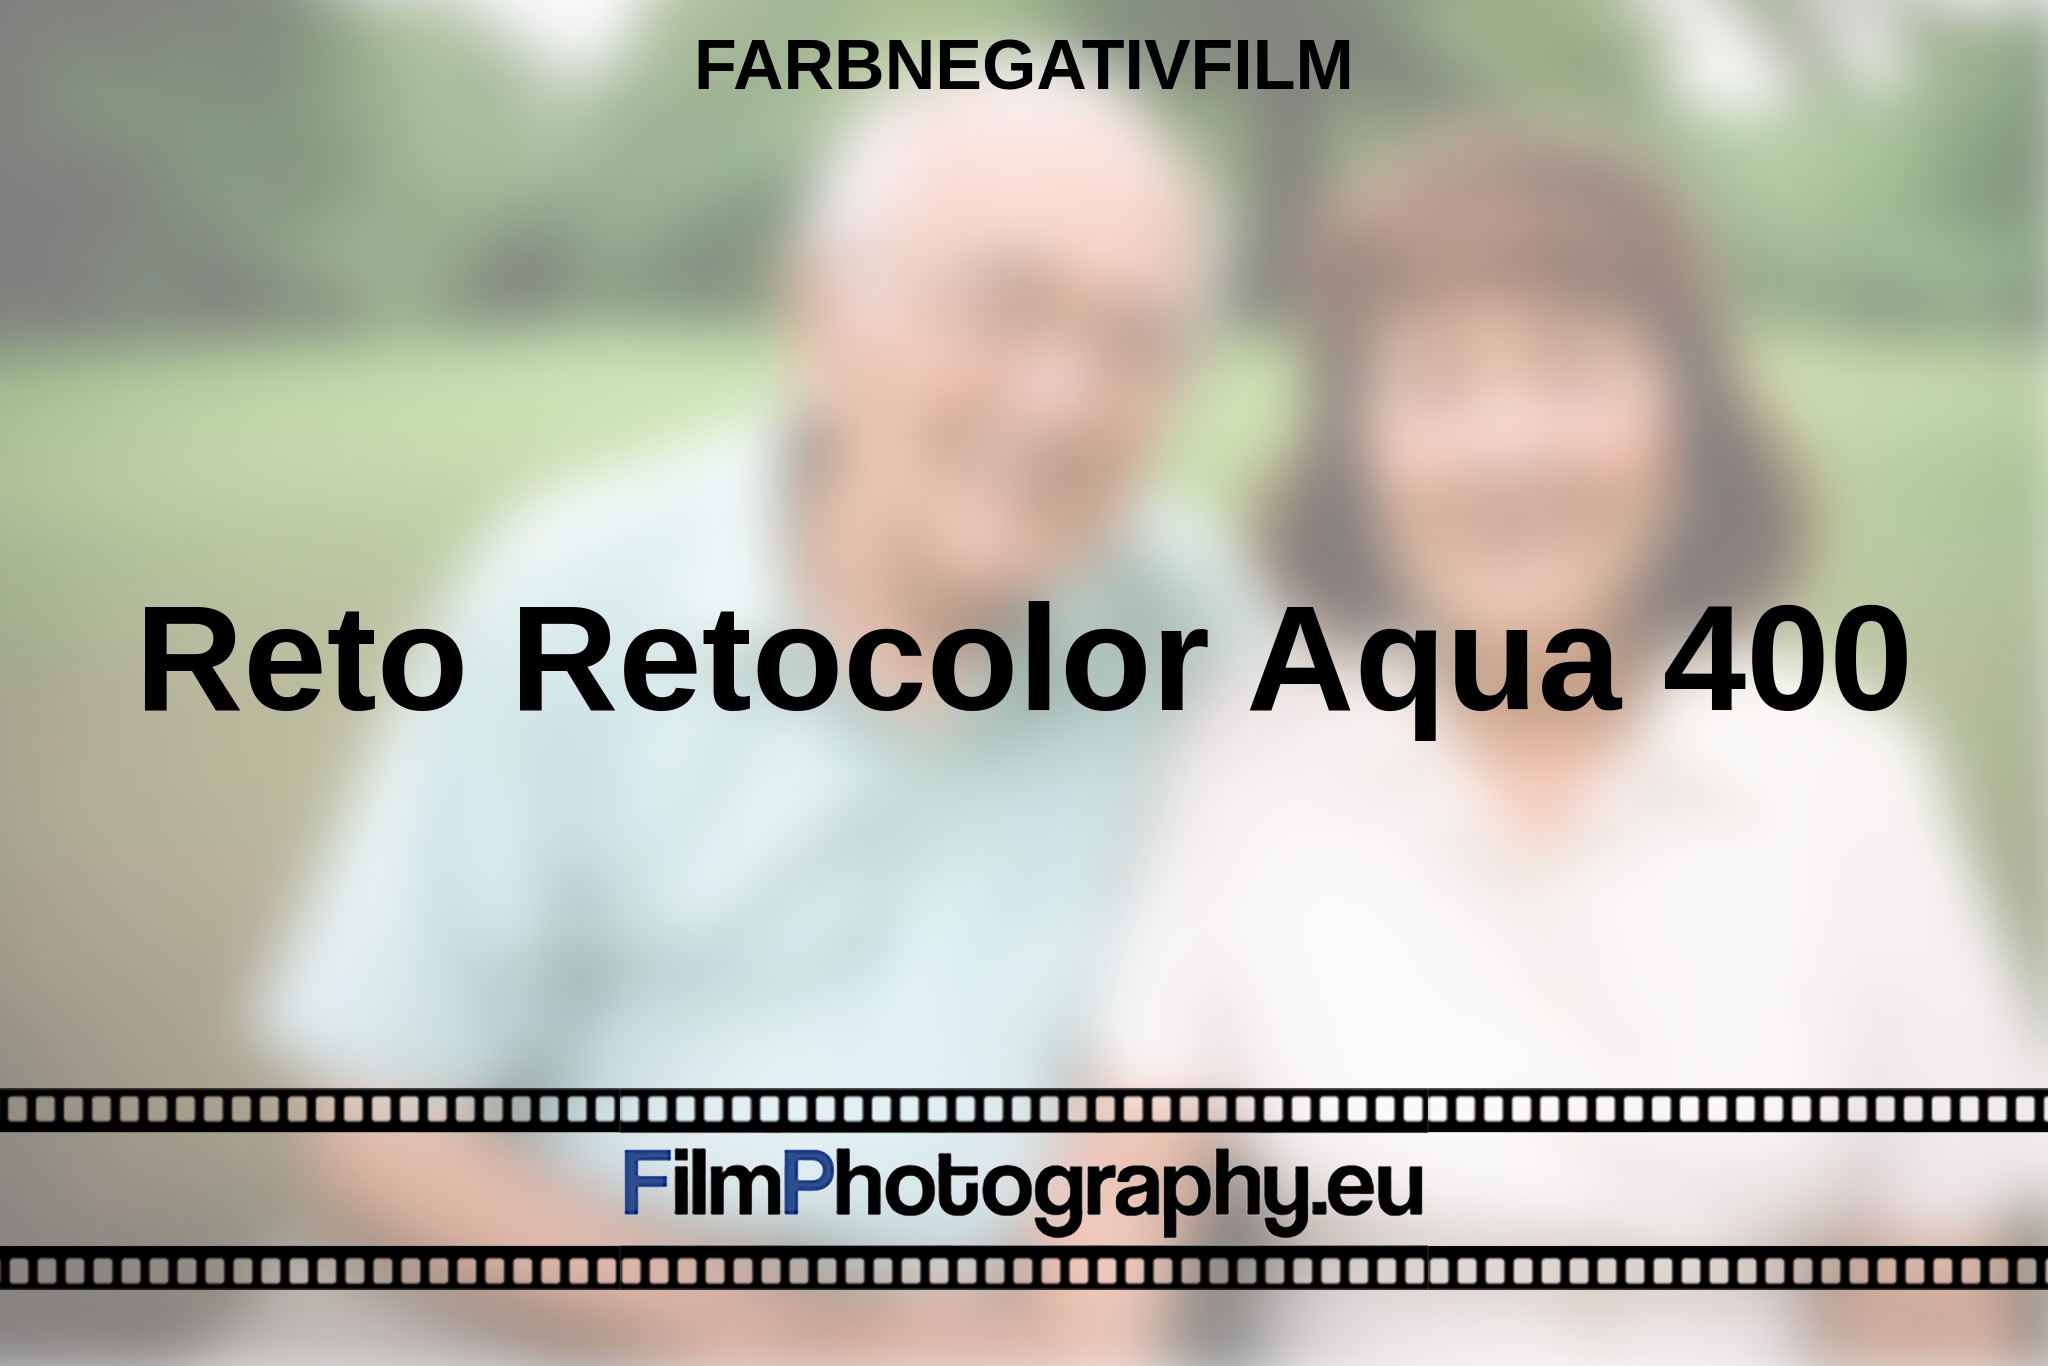 reto-retocolor-aqua-400-farbnegativfilm-bnv.jpg